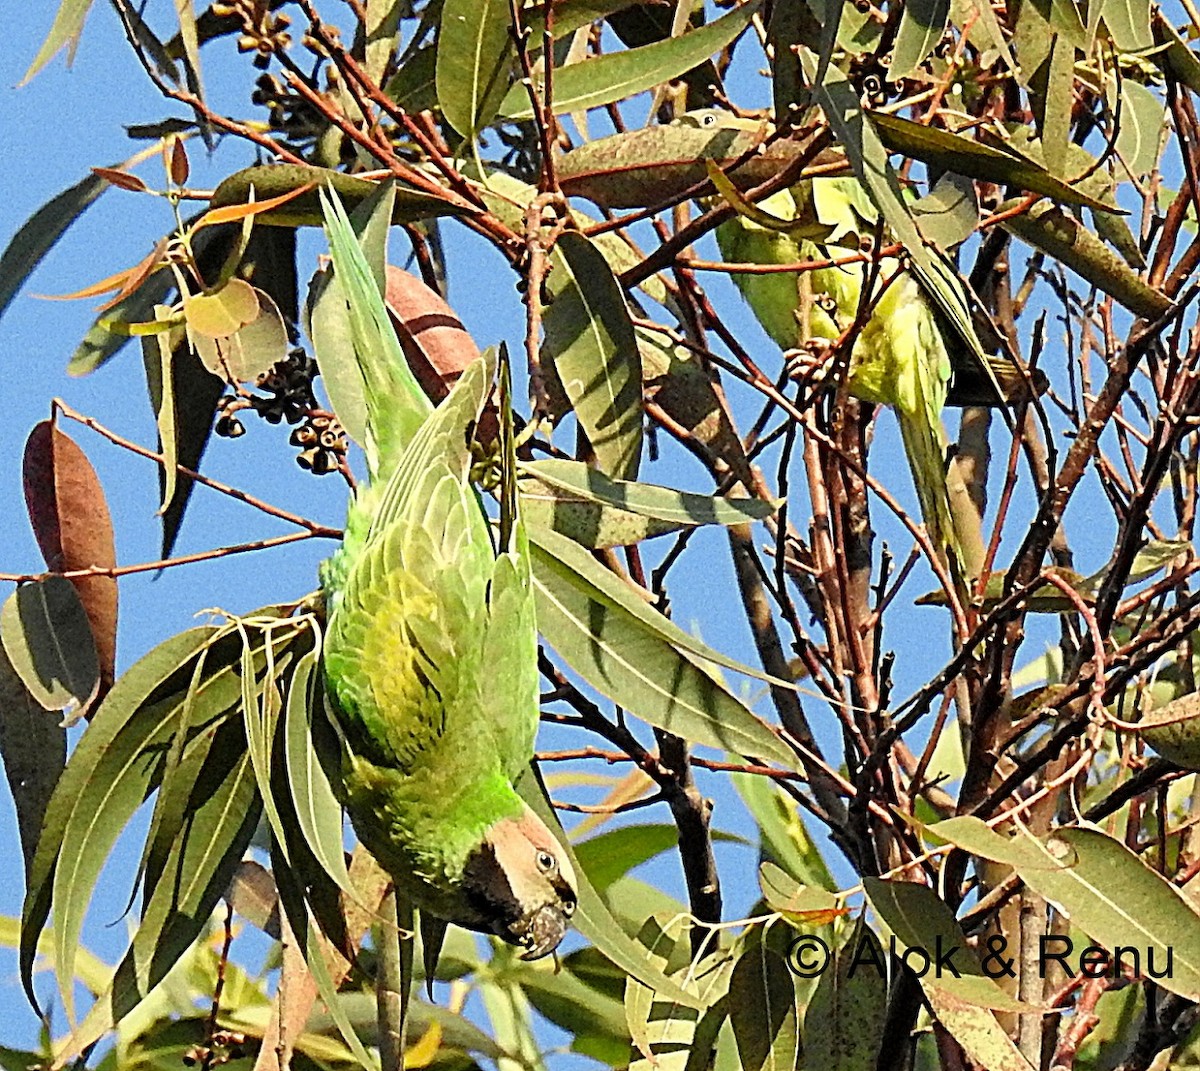 Red-breasted Parakeet - Alok Tewari